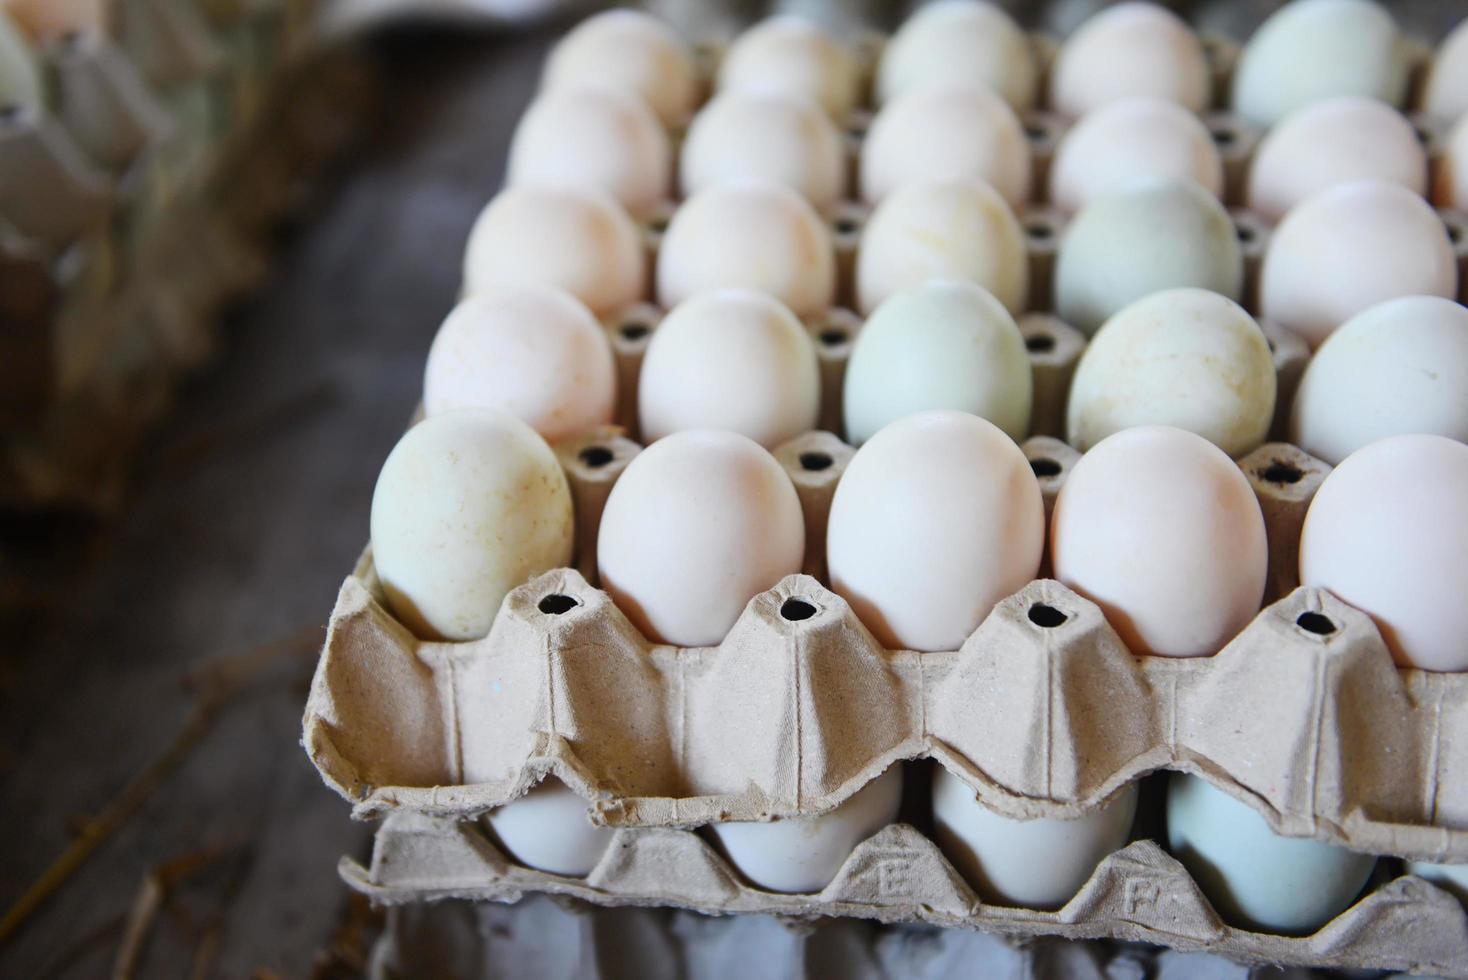 huevos frescos caja de huevos de pato blanco: produzca huevos frescos de la granja orgánicos foto